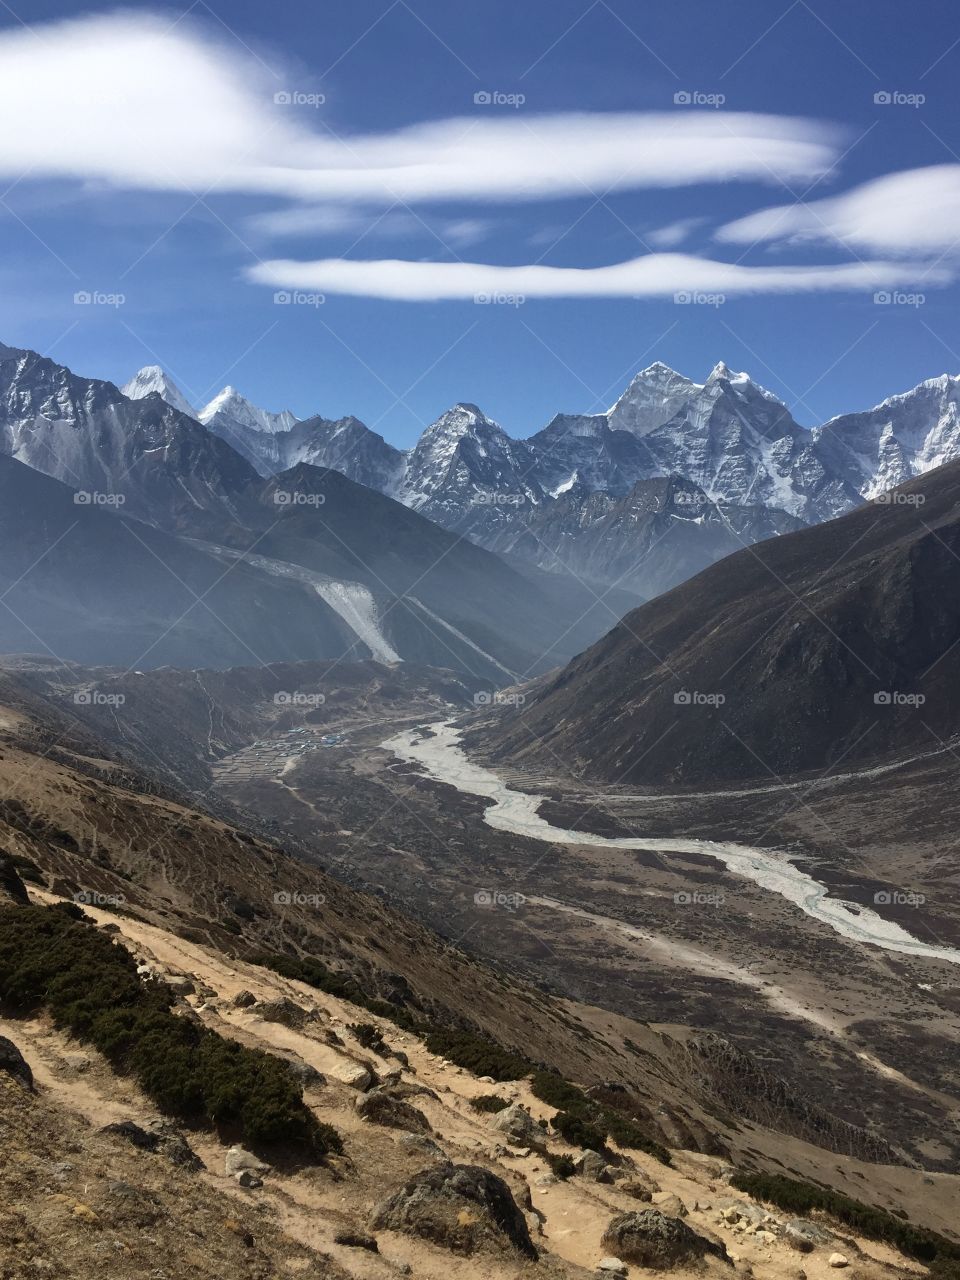 Everest Base Camp trek: the mountains and valleys of Sagarmartha national Park.